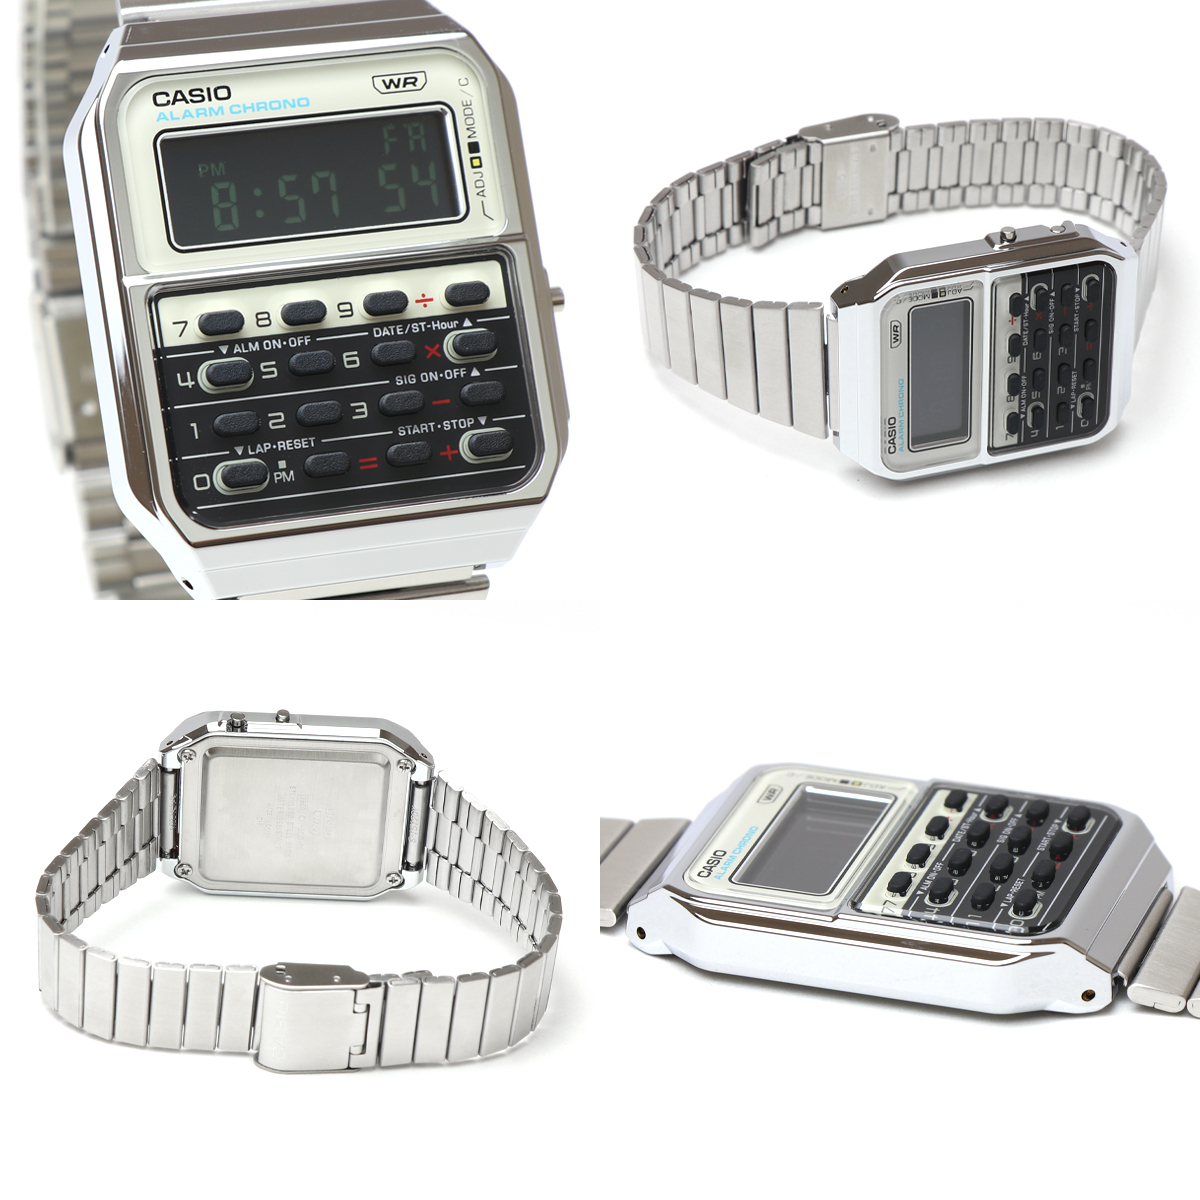 CASIO カシオ カリキュレーター CA-500WE-7B ホワイト データバンク DATABANK 電卓 計算機 メンズ レディース 腕時計 でんクロ CQ-1 復刻版_画像4